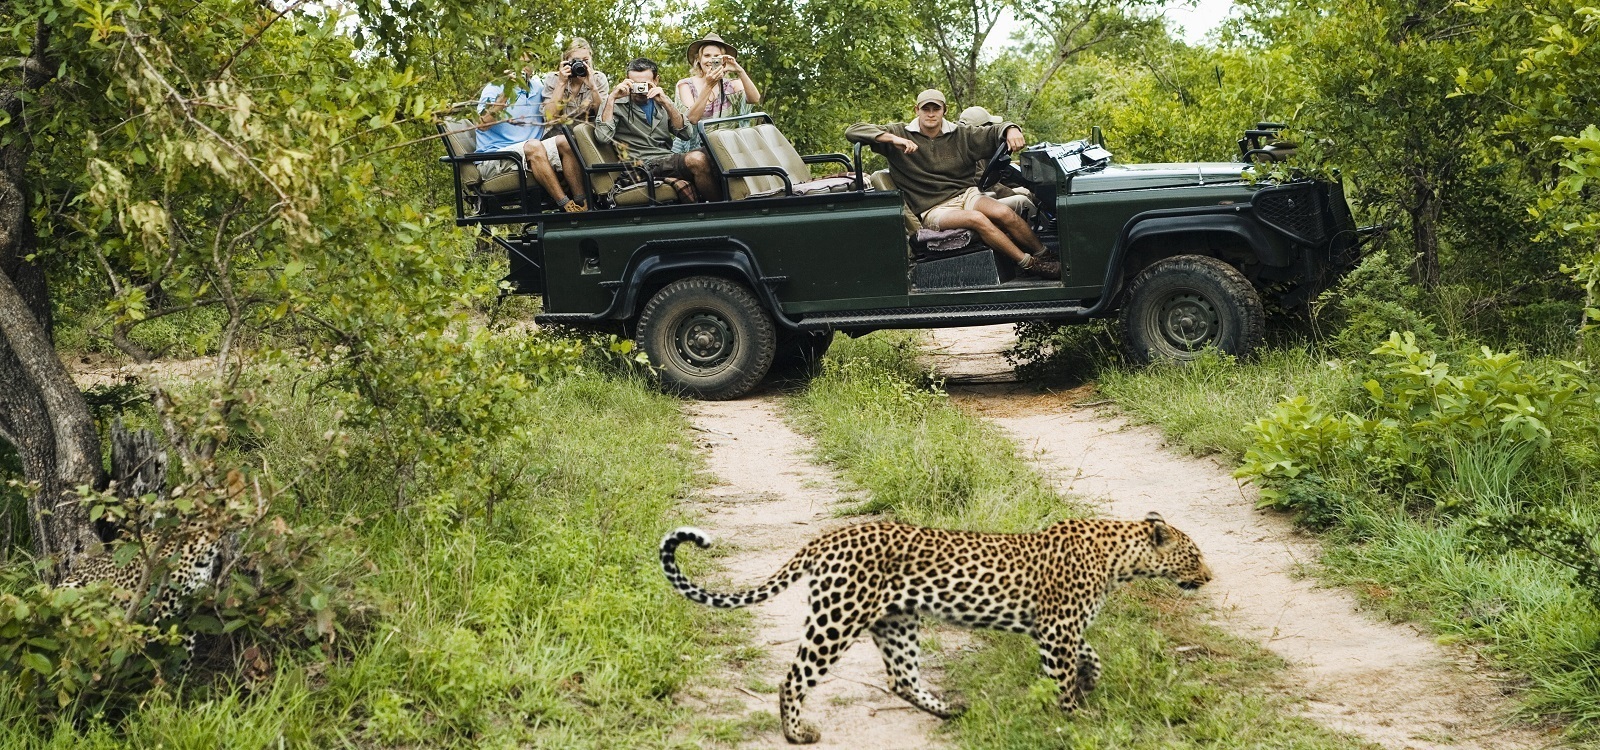 safari in south africa blog